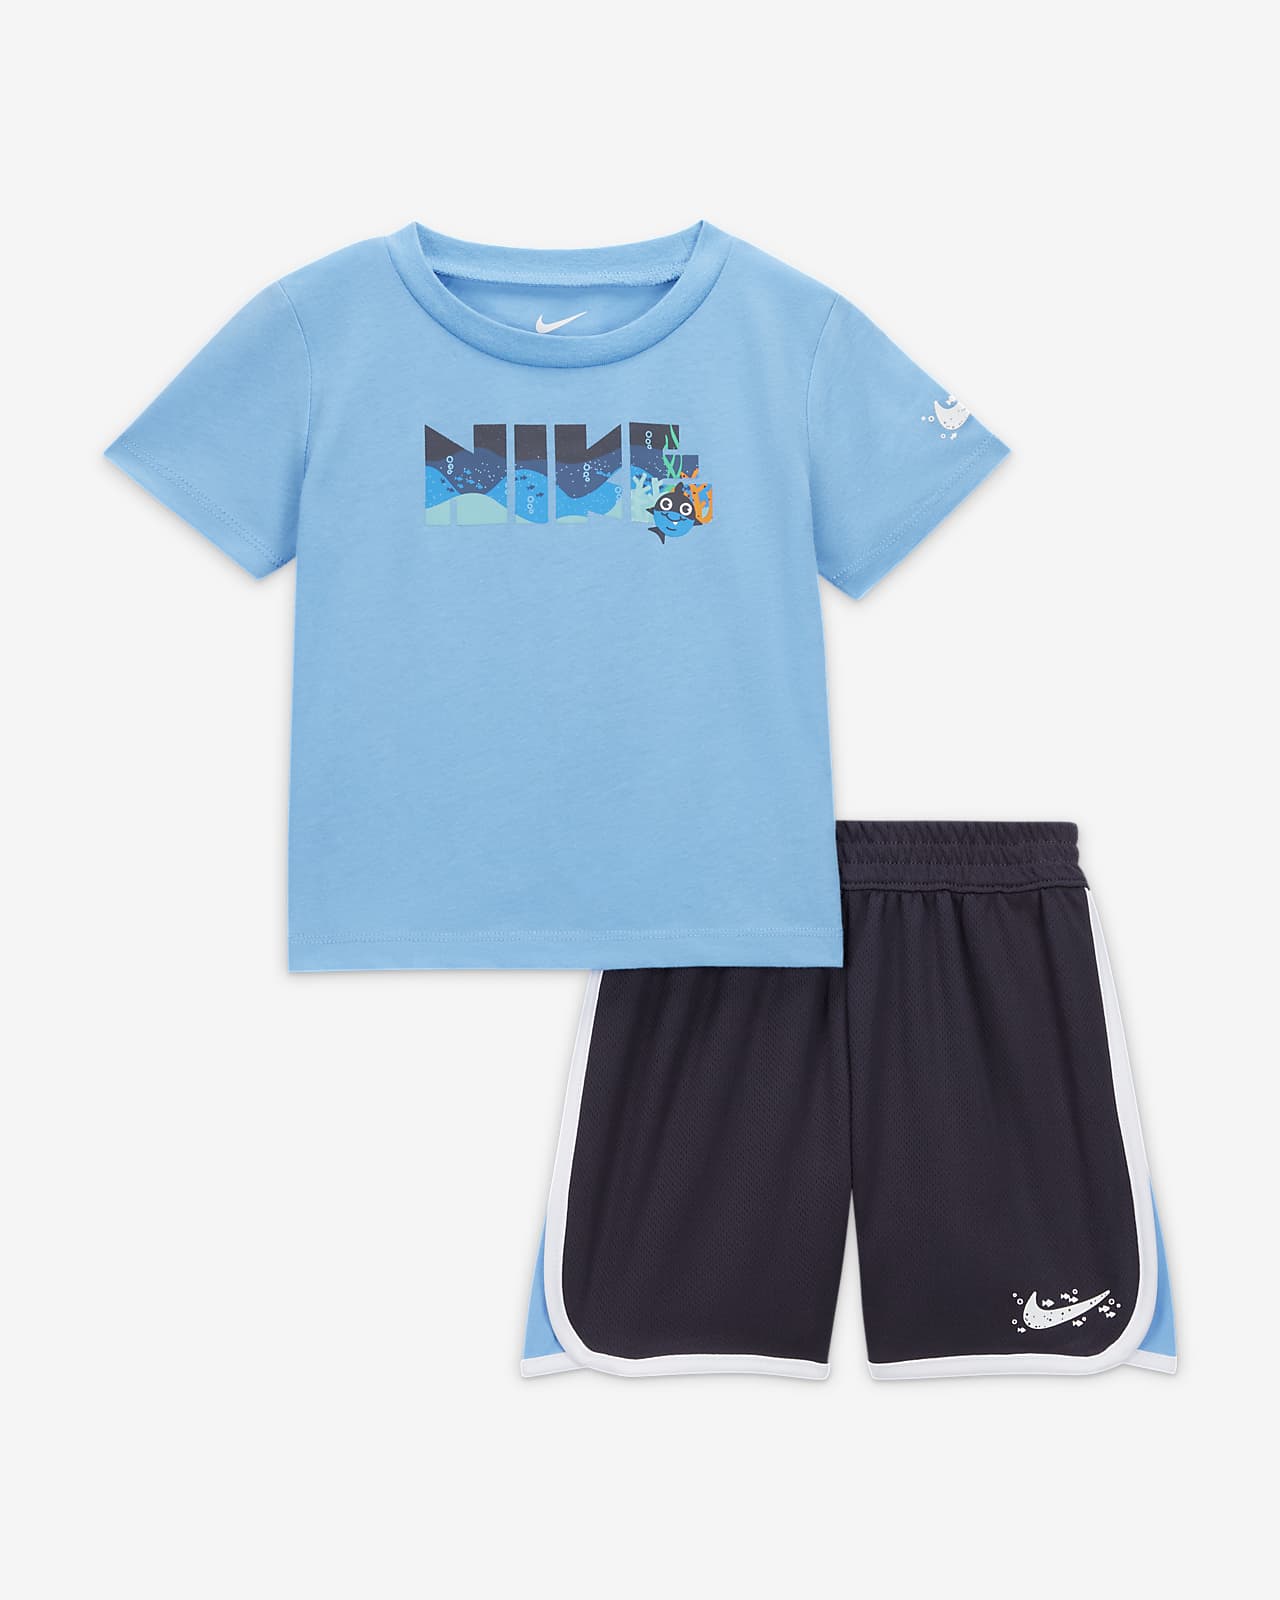 Nike Sportswear Coral Reef Mesh Shorts Set Conjunt de dues peces - Nadó